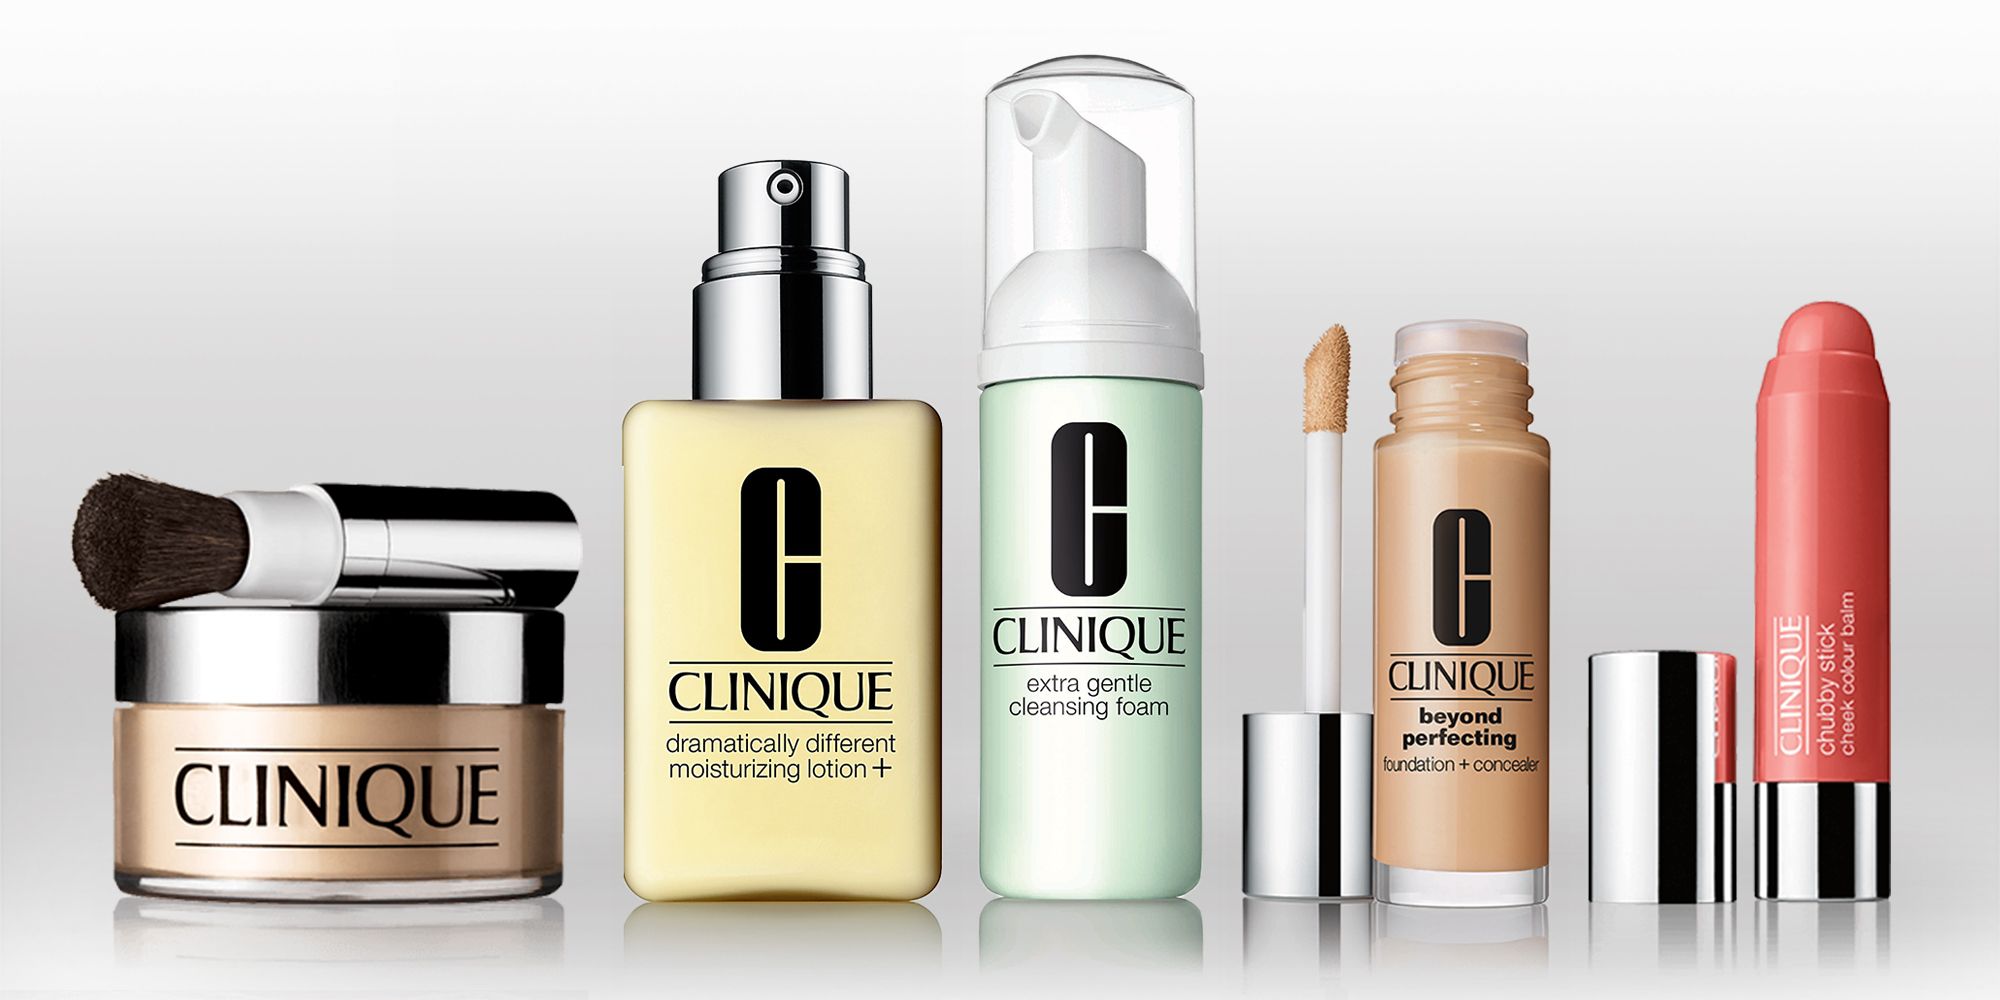 Information Uafhængighed vil gøre 19 Best Clinique Makeup & Skincare Products in 2018